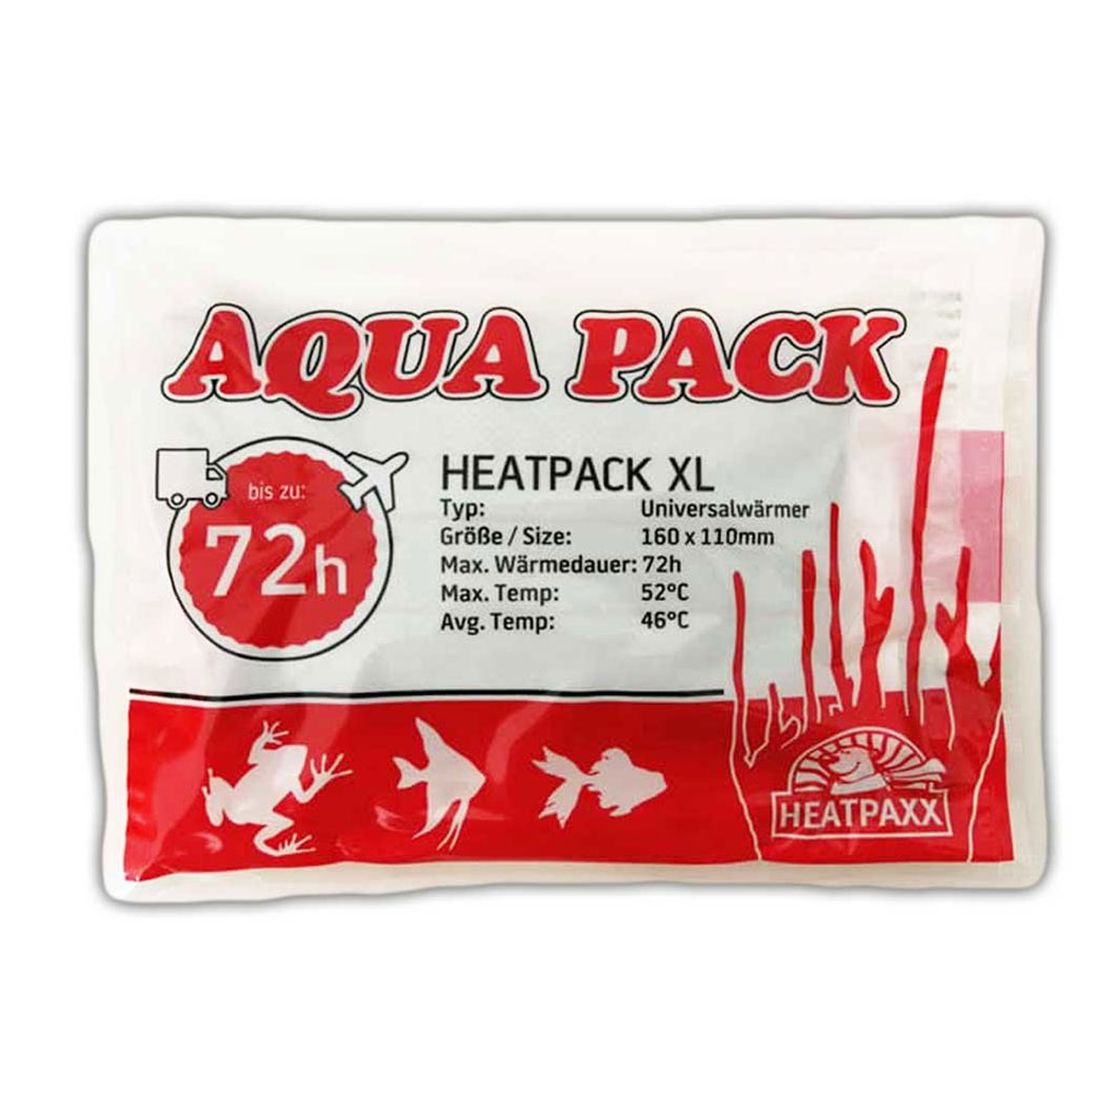 Sacchetto riscaldante AQUA PACK Heat Pack XL 72h